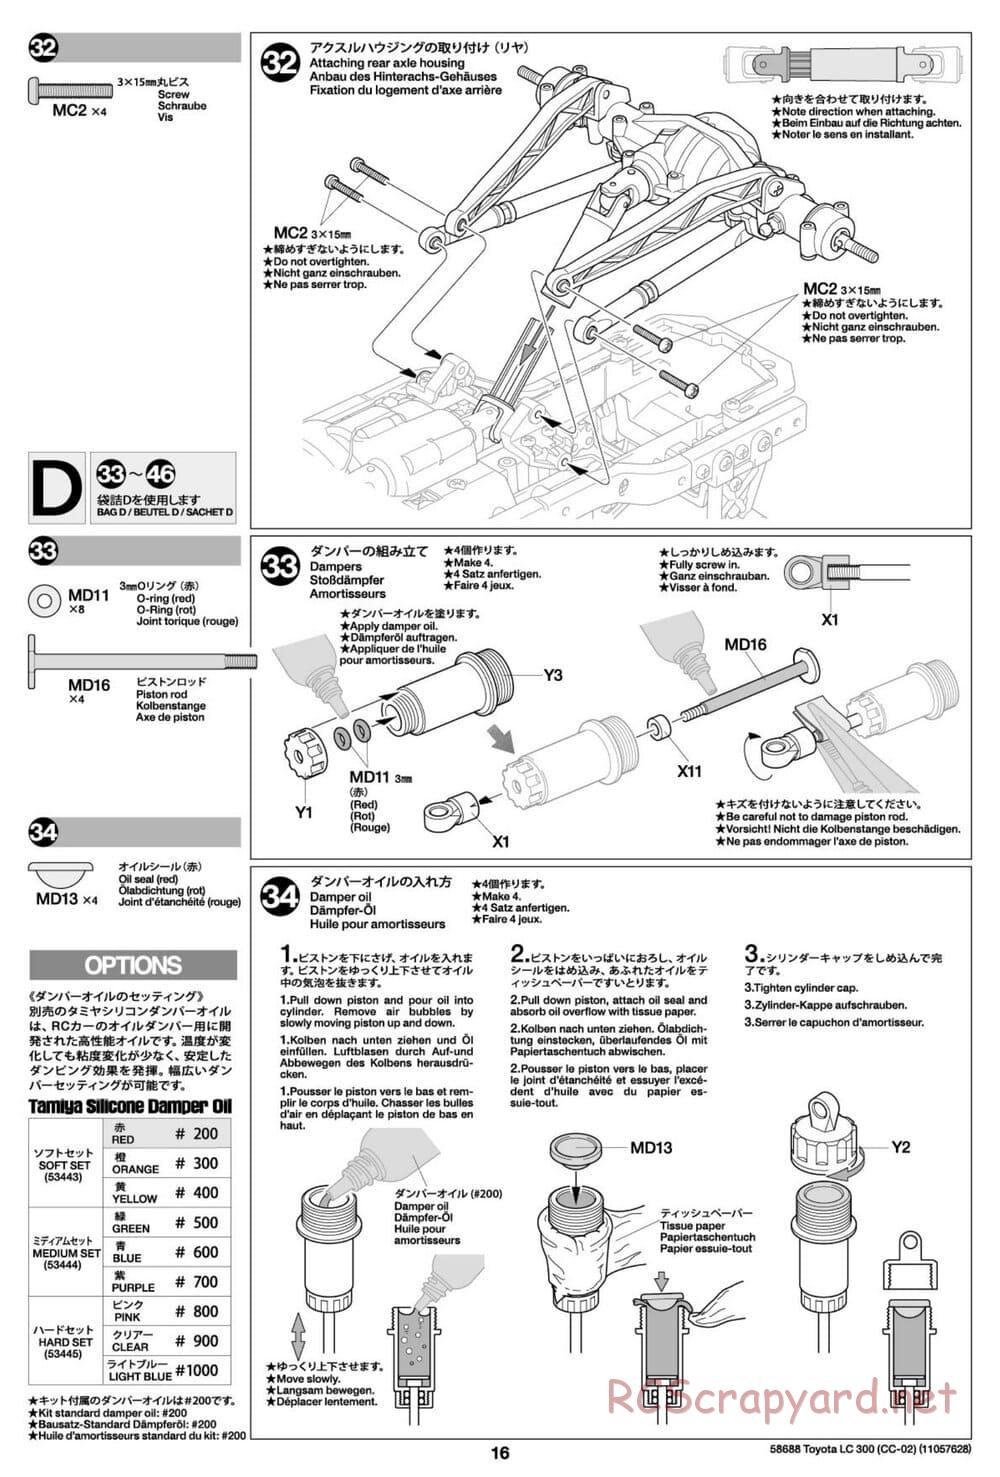 Tamiya - Toyota Land Cruiser 300 - CC-02 Chassis - Manual - Page 16